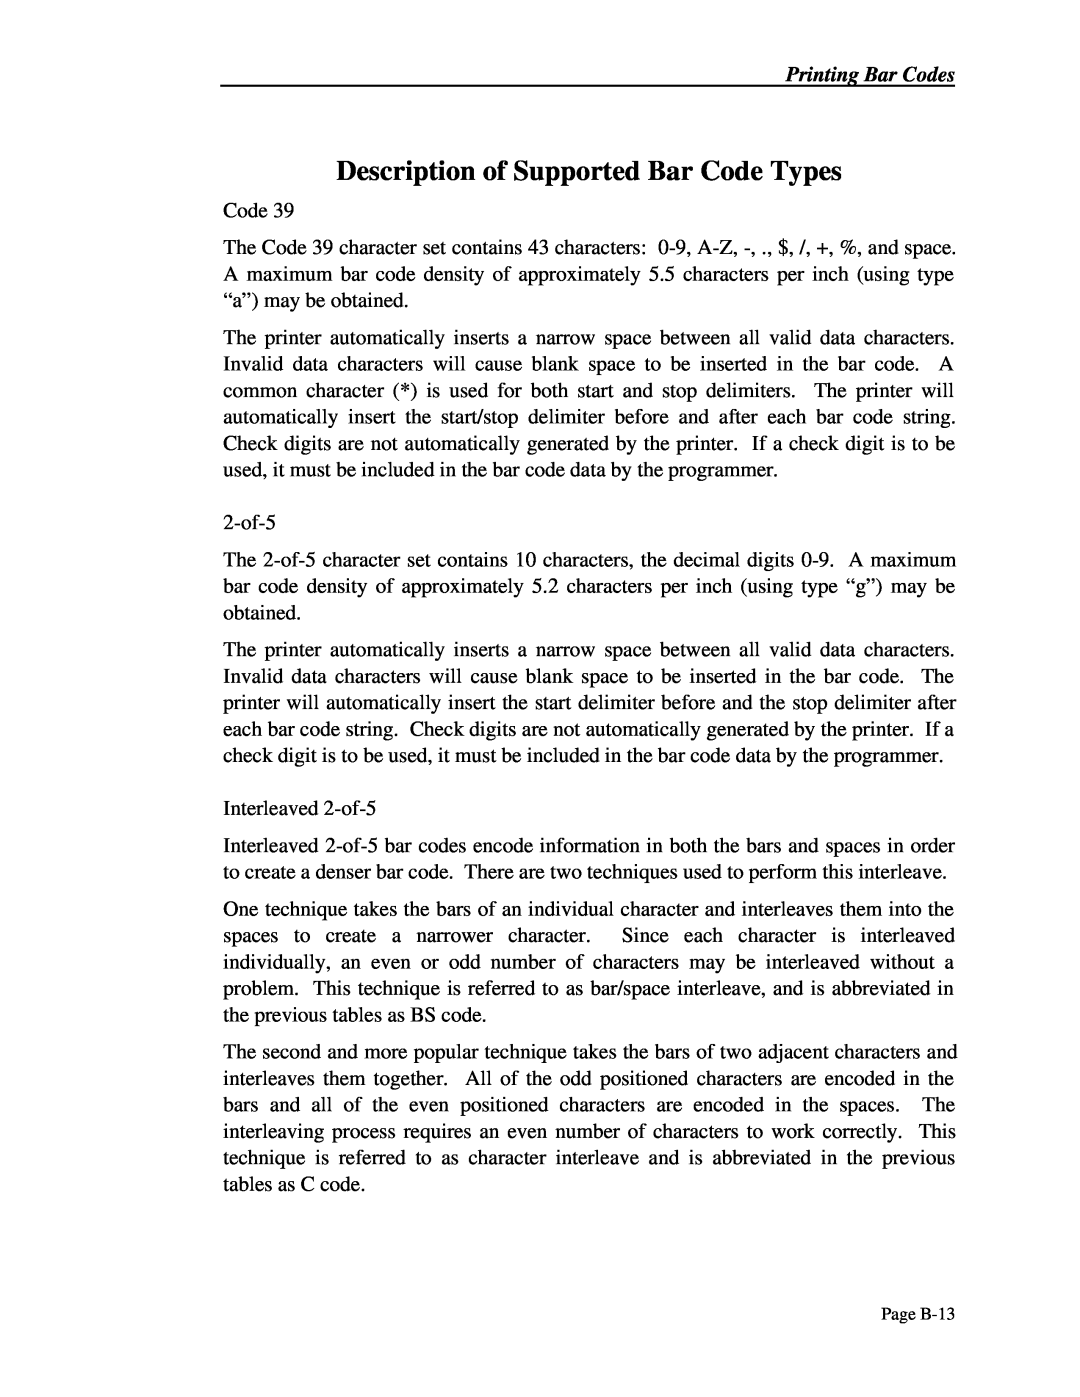 Printek 4503, 4300, 4500 manual Description of Supported Bar Code Types 